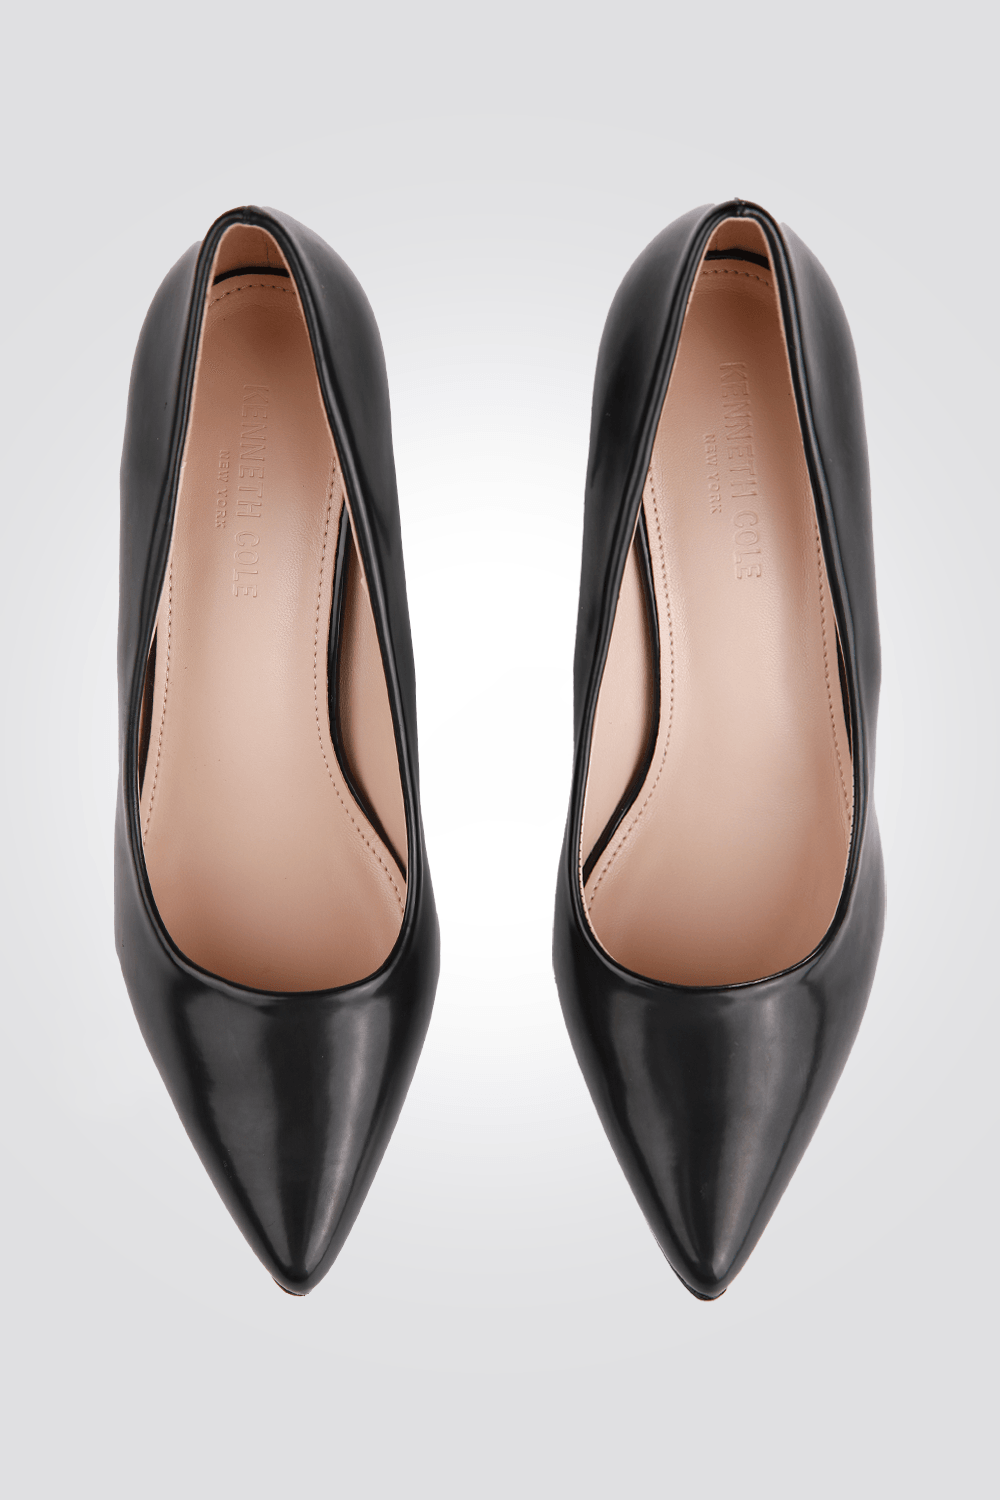 KENNETH COLE - נעל עקב לקה STILETTO HEEL בצבע שחור - MASHBIR//365